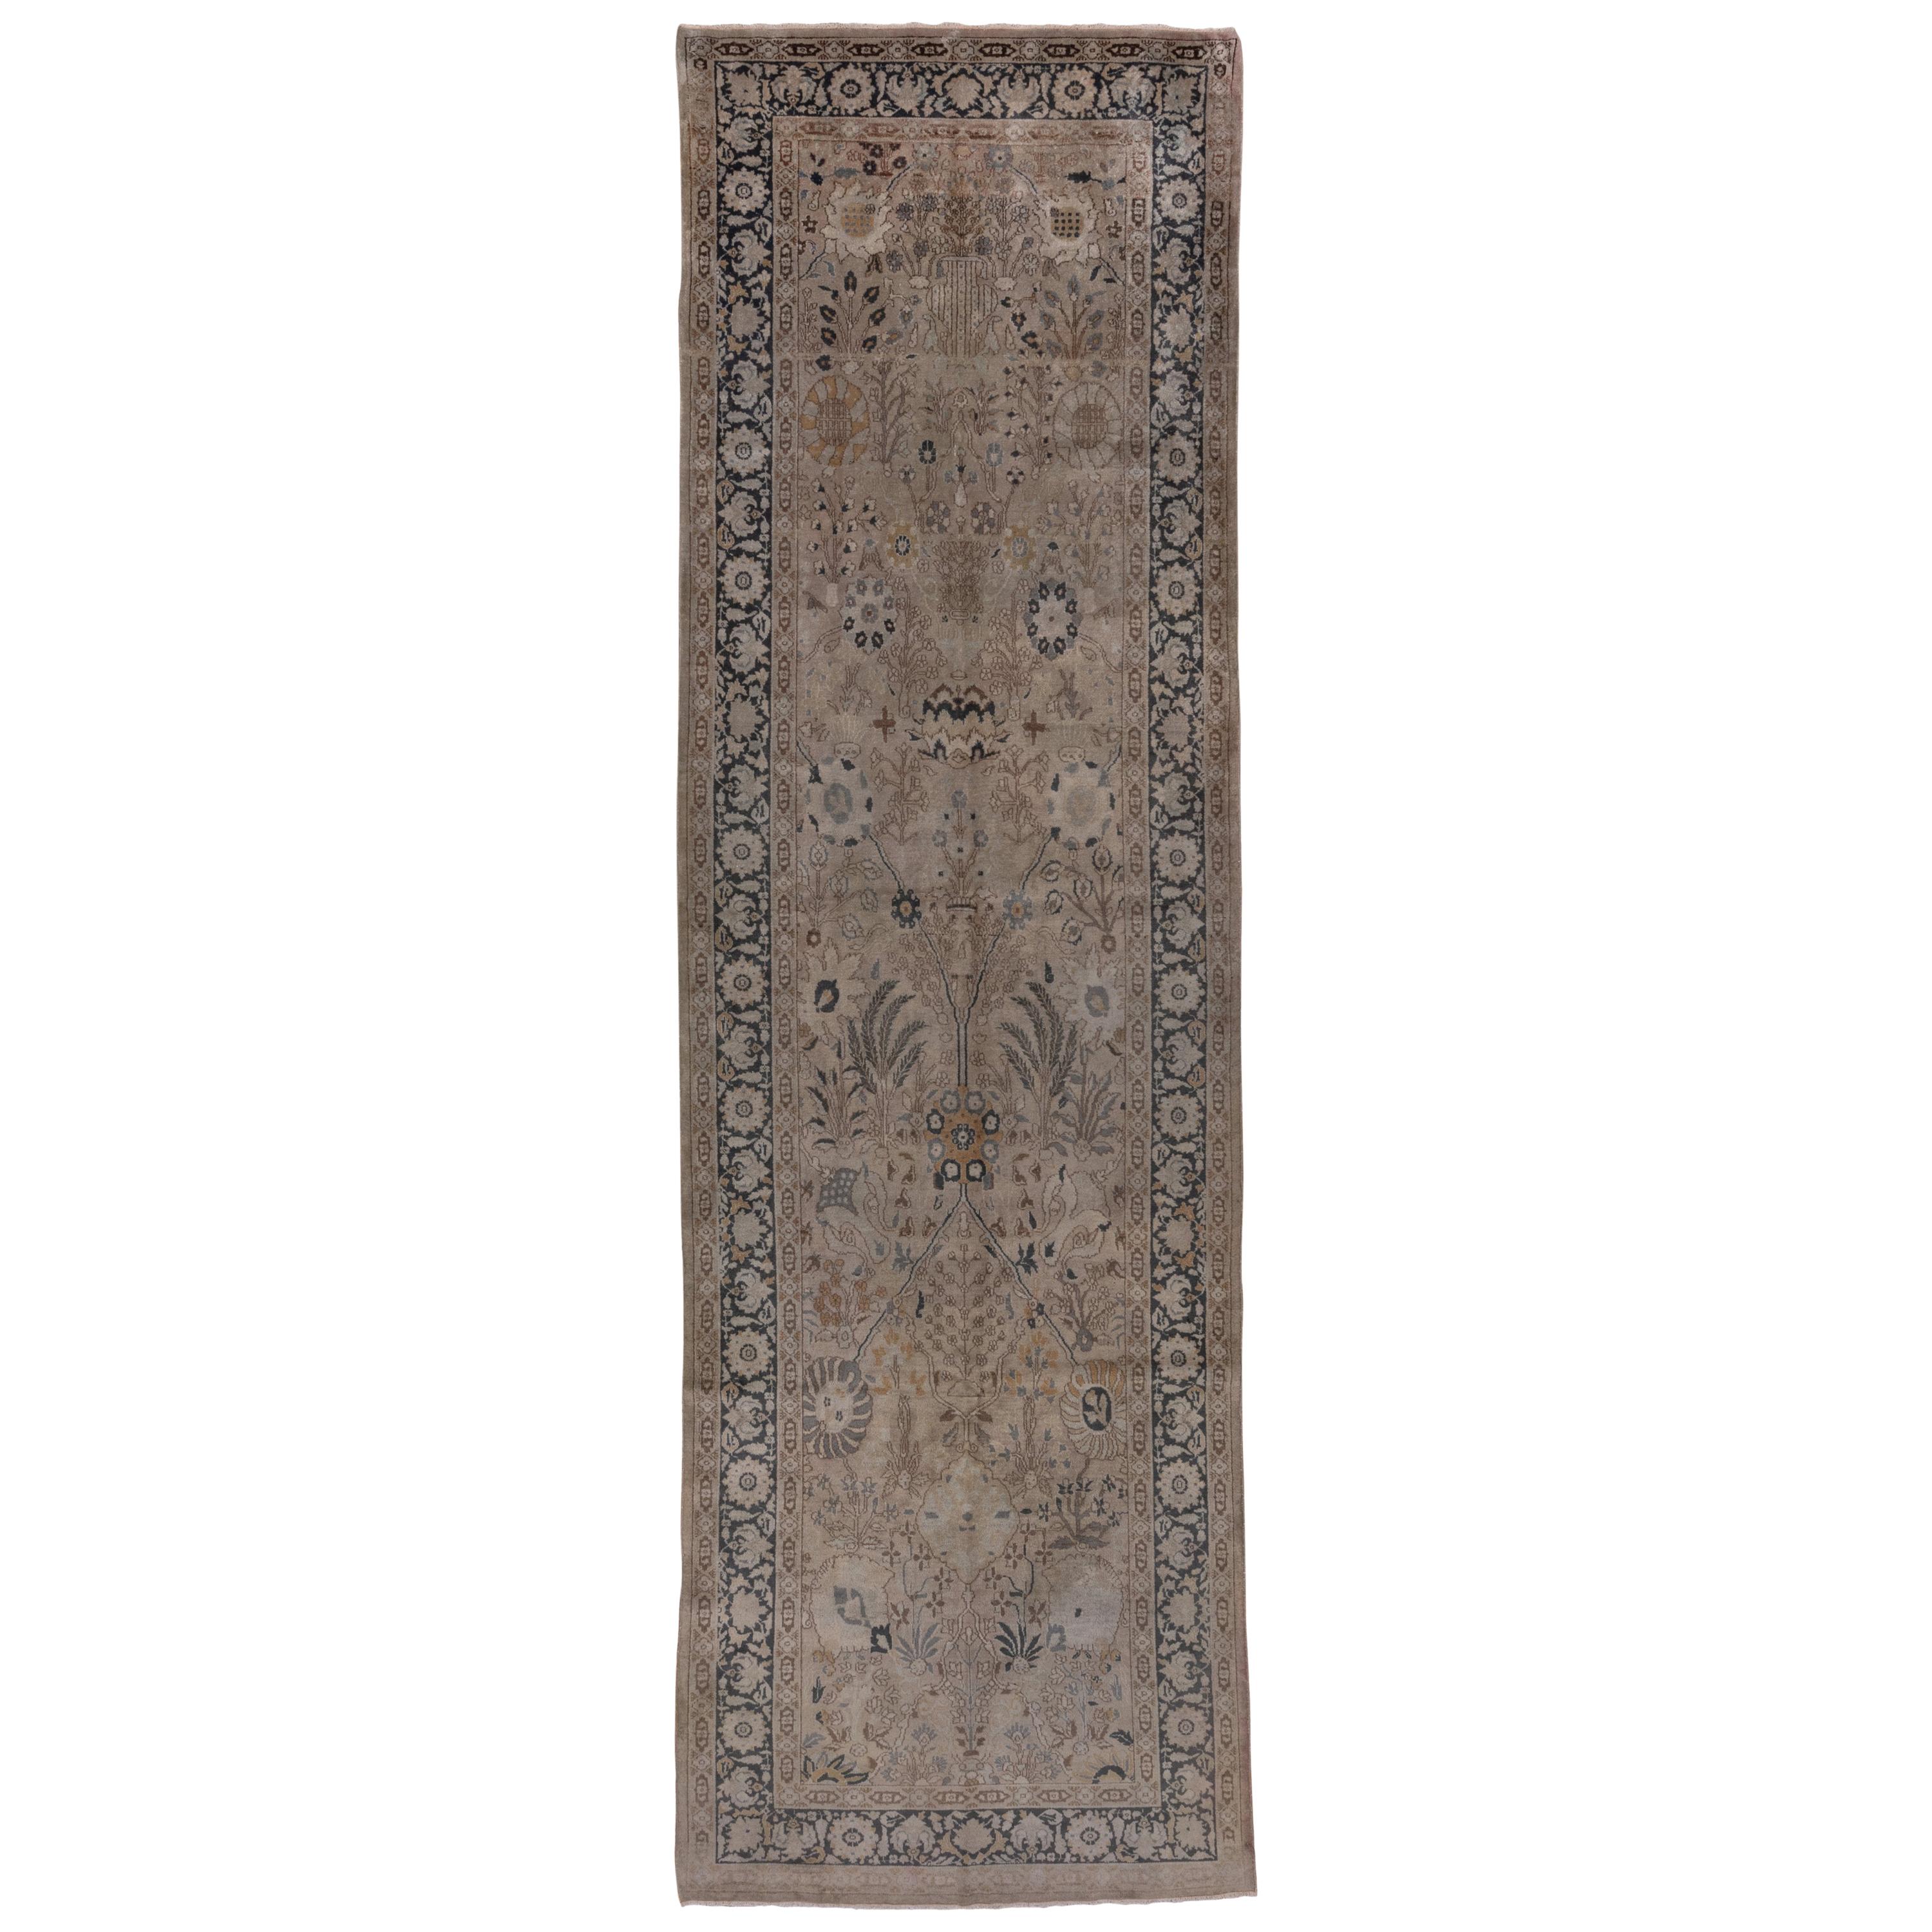 Attractive Indian Laristan Gallery Carpet, Grey Tones, Neutral Palette